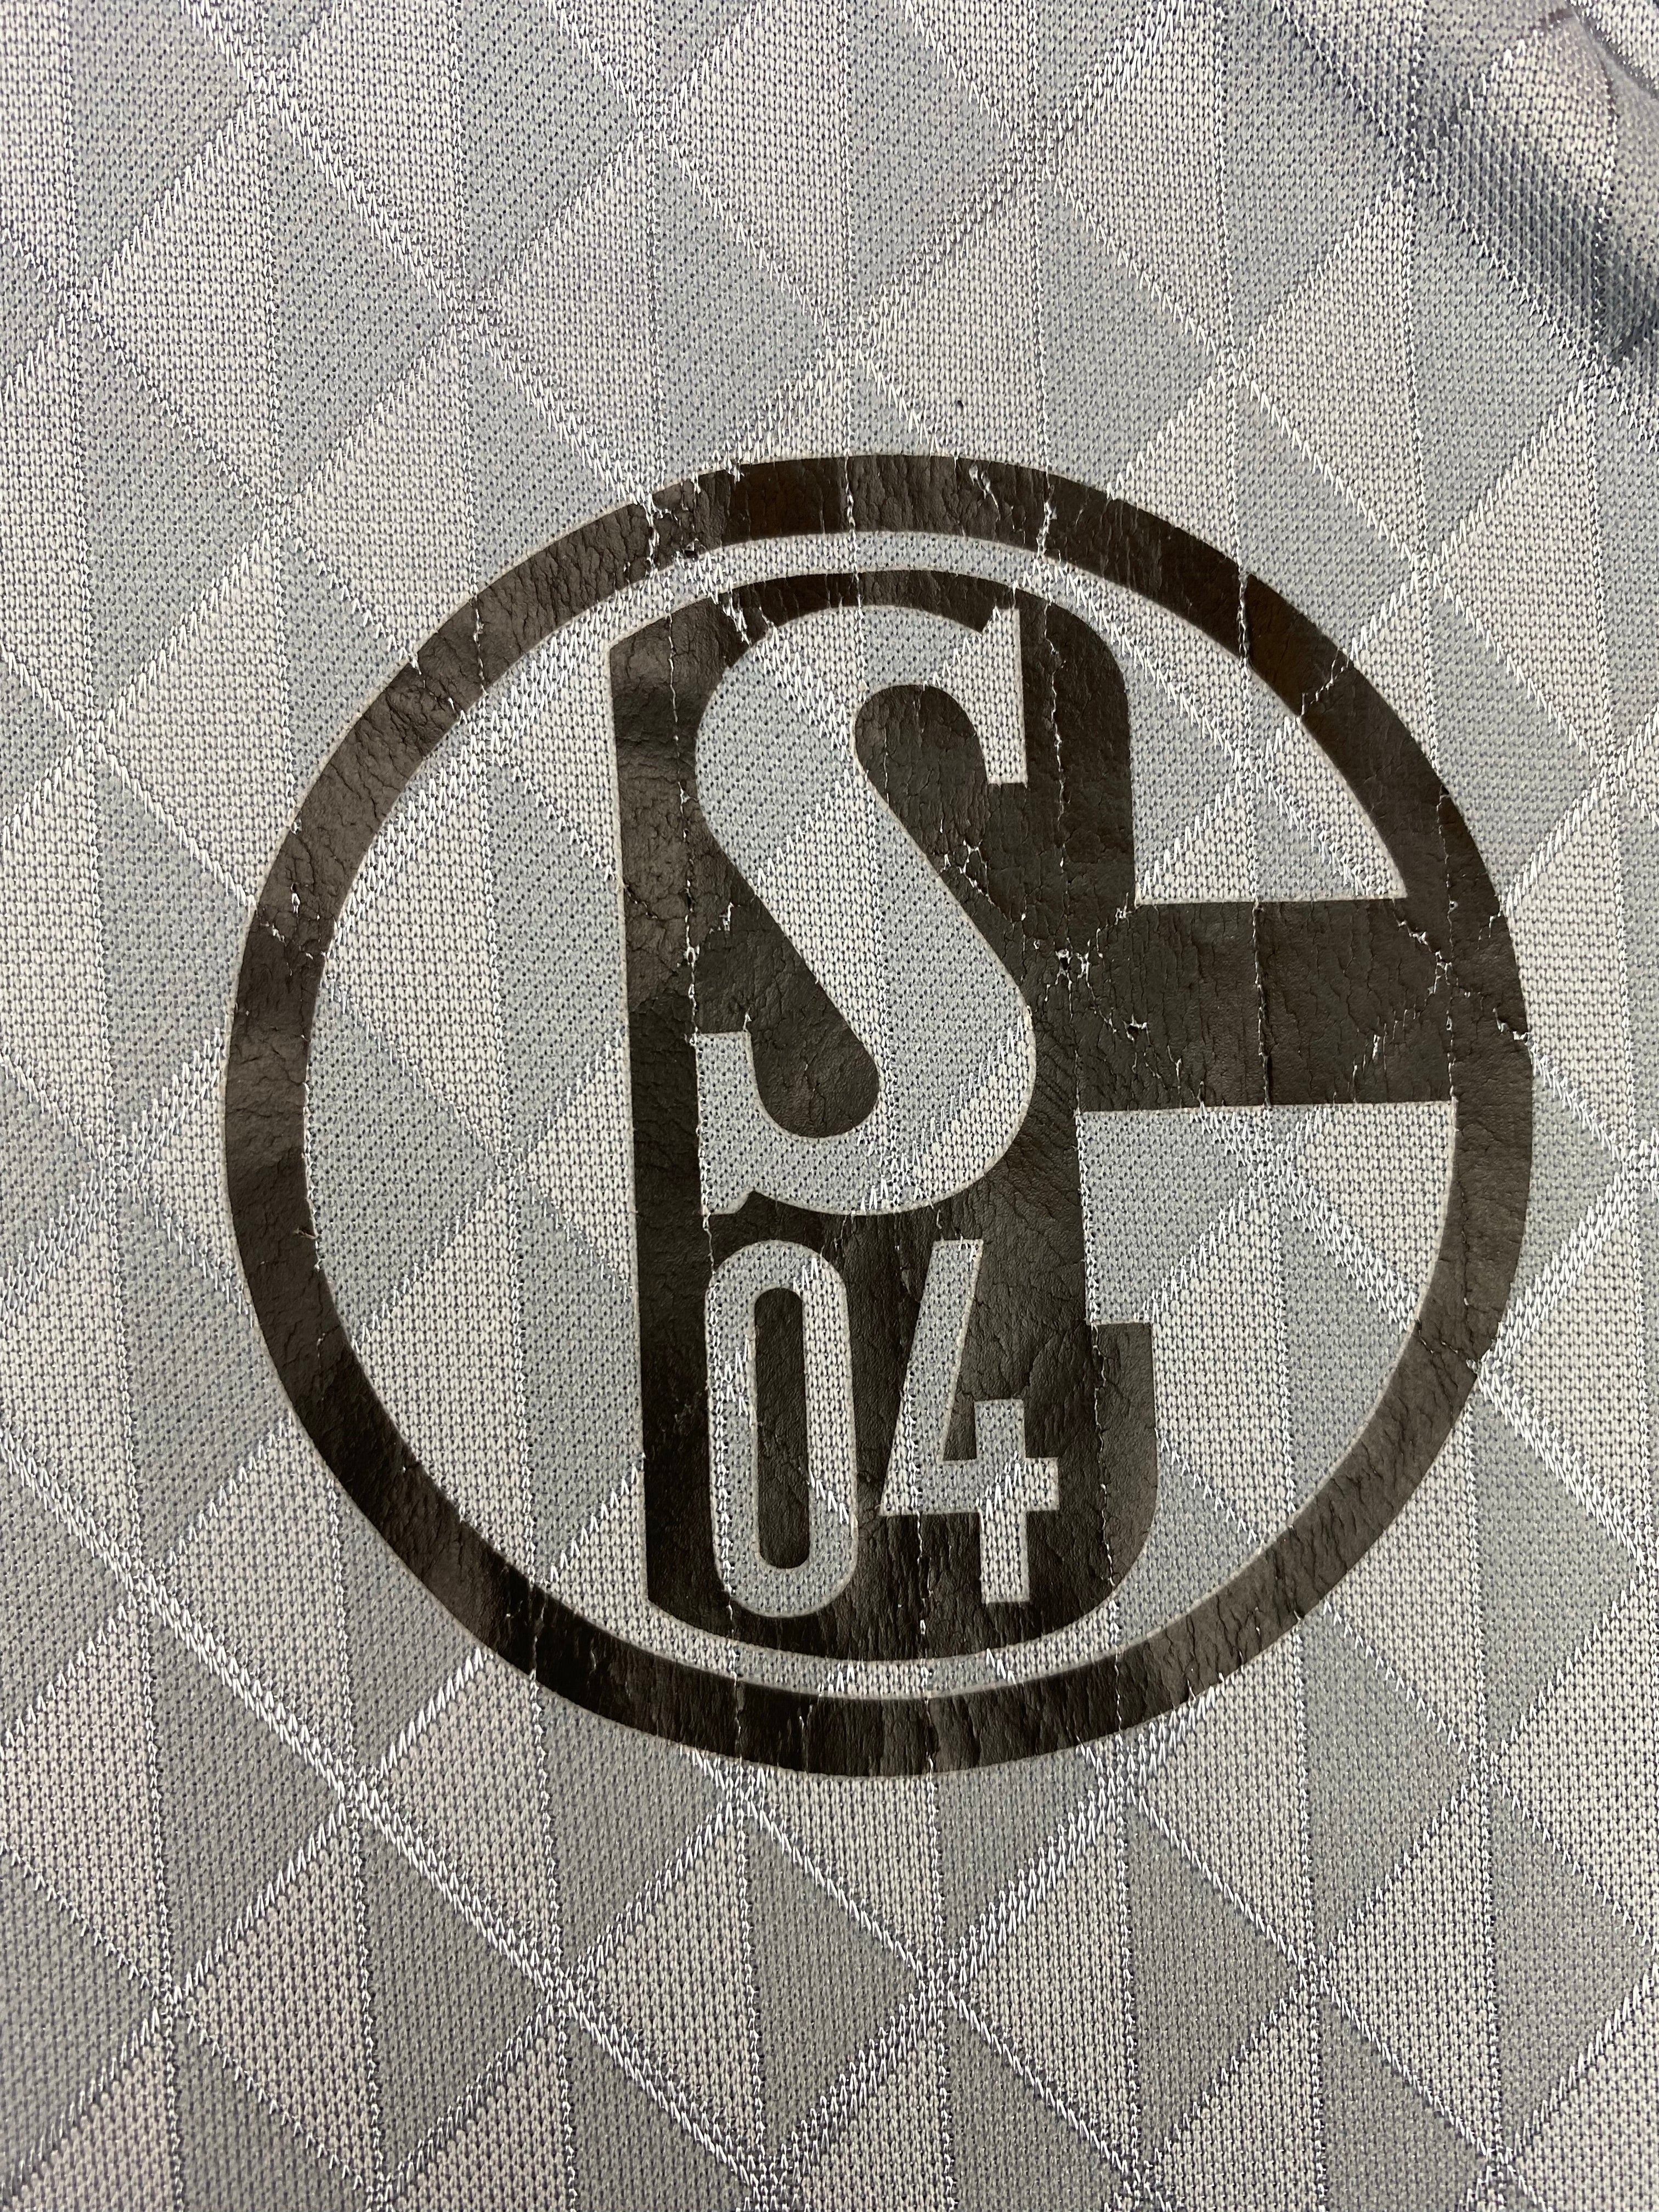 2006/07 Schalke GK S/S Shirt (L) 6/10